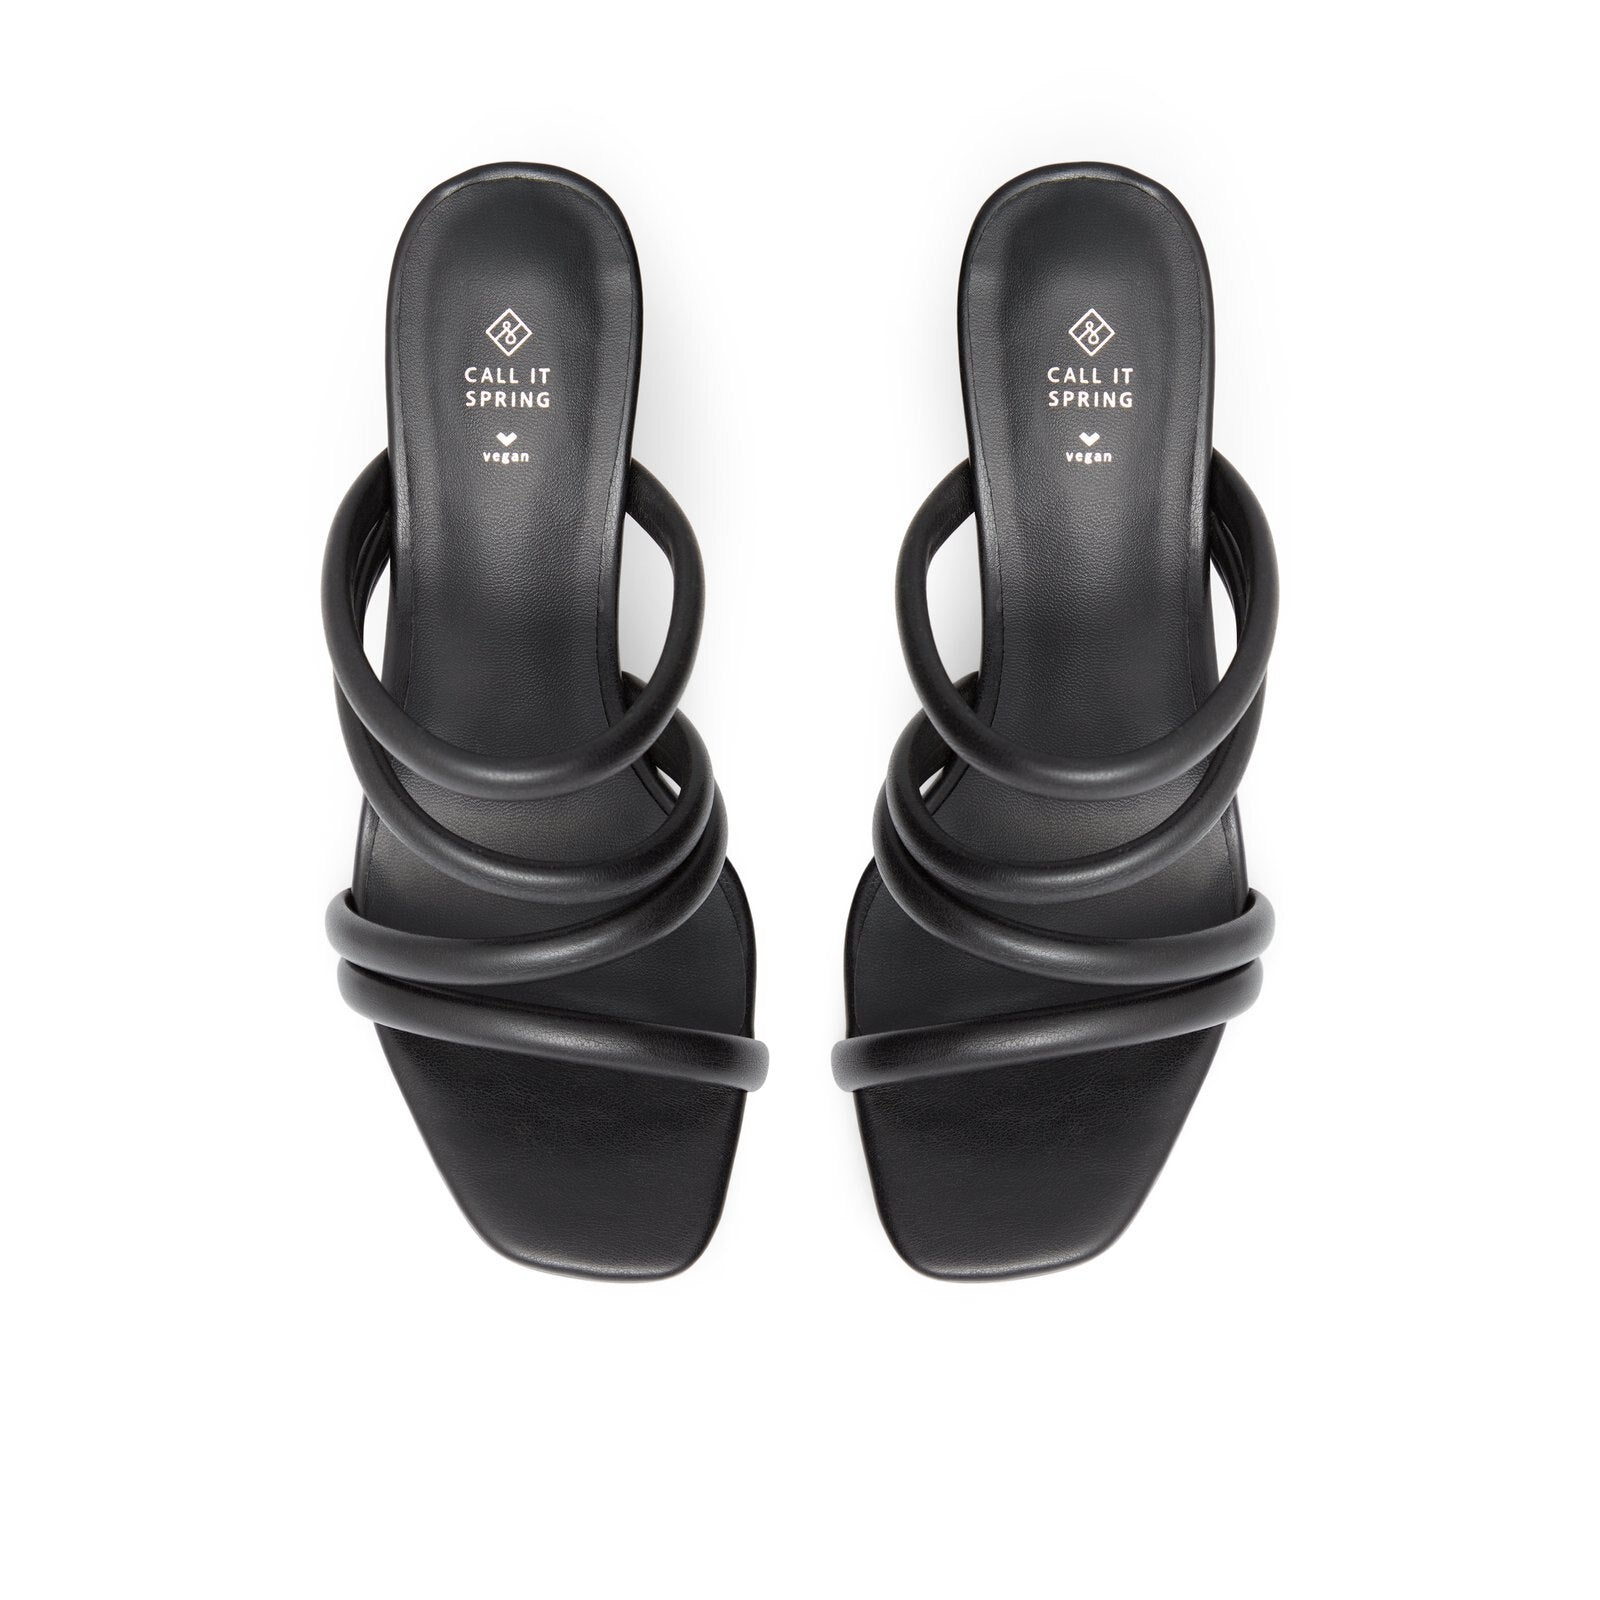 Cherie / Heeled Sandals Women Shoes - Black - CALL IT SPRING KSA